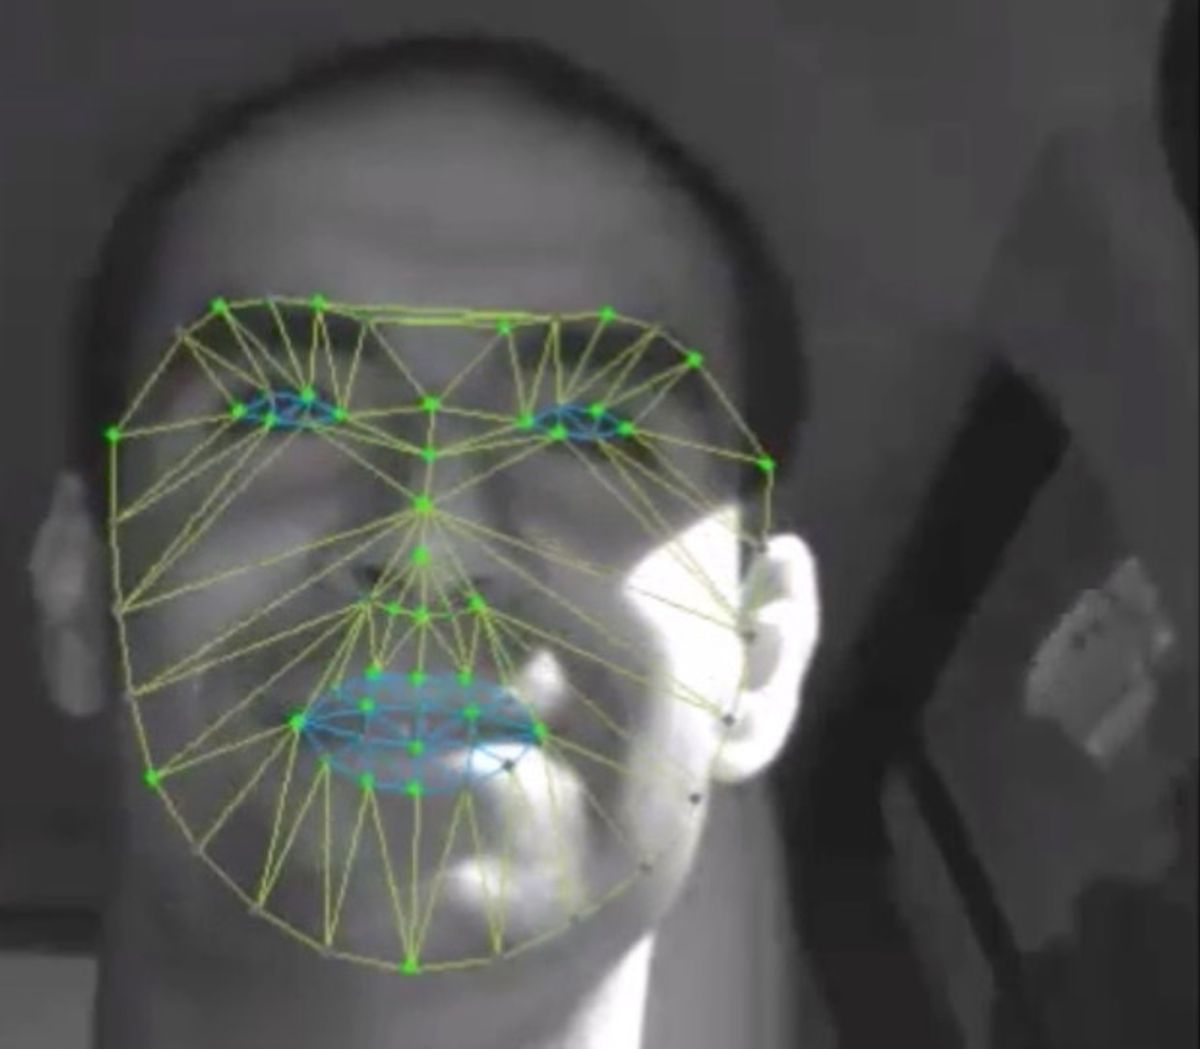 In-cabin camera monitors driver in self-driving car